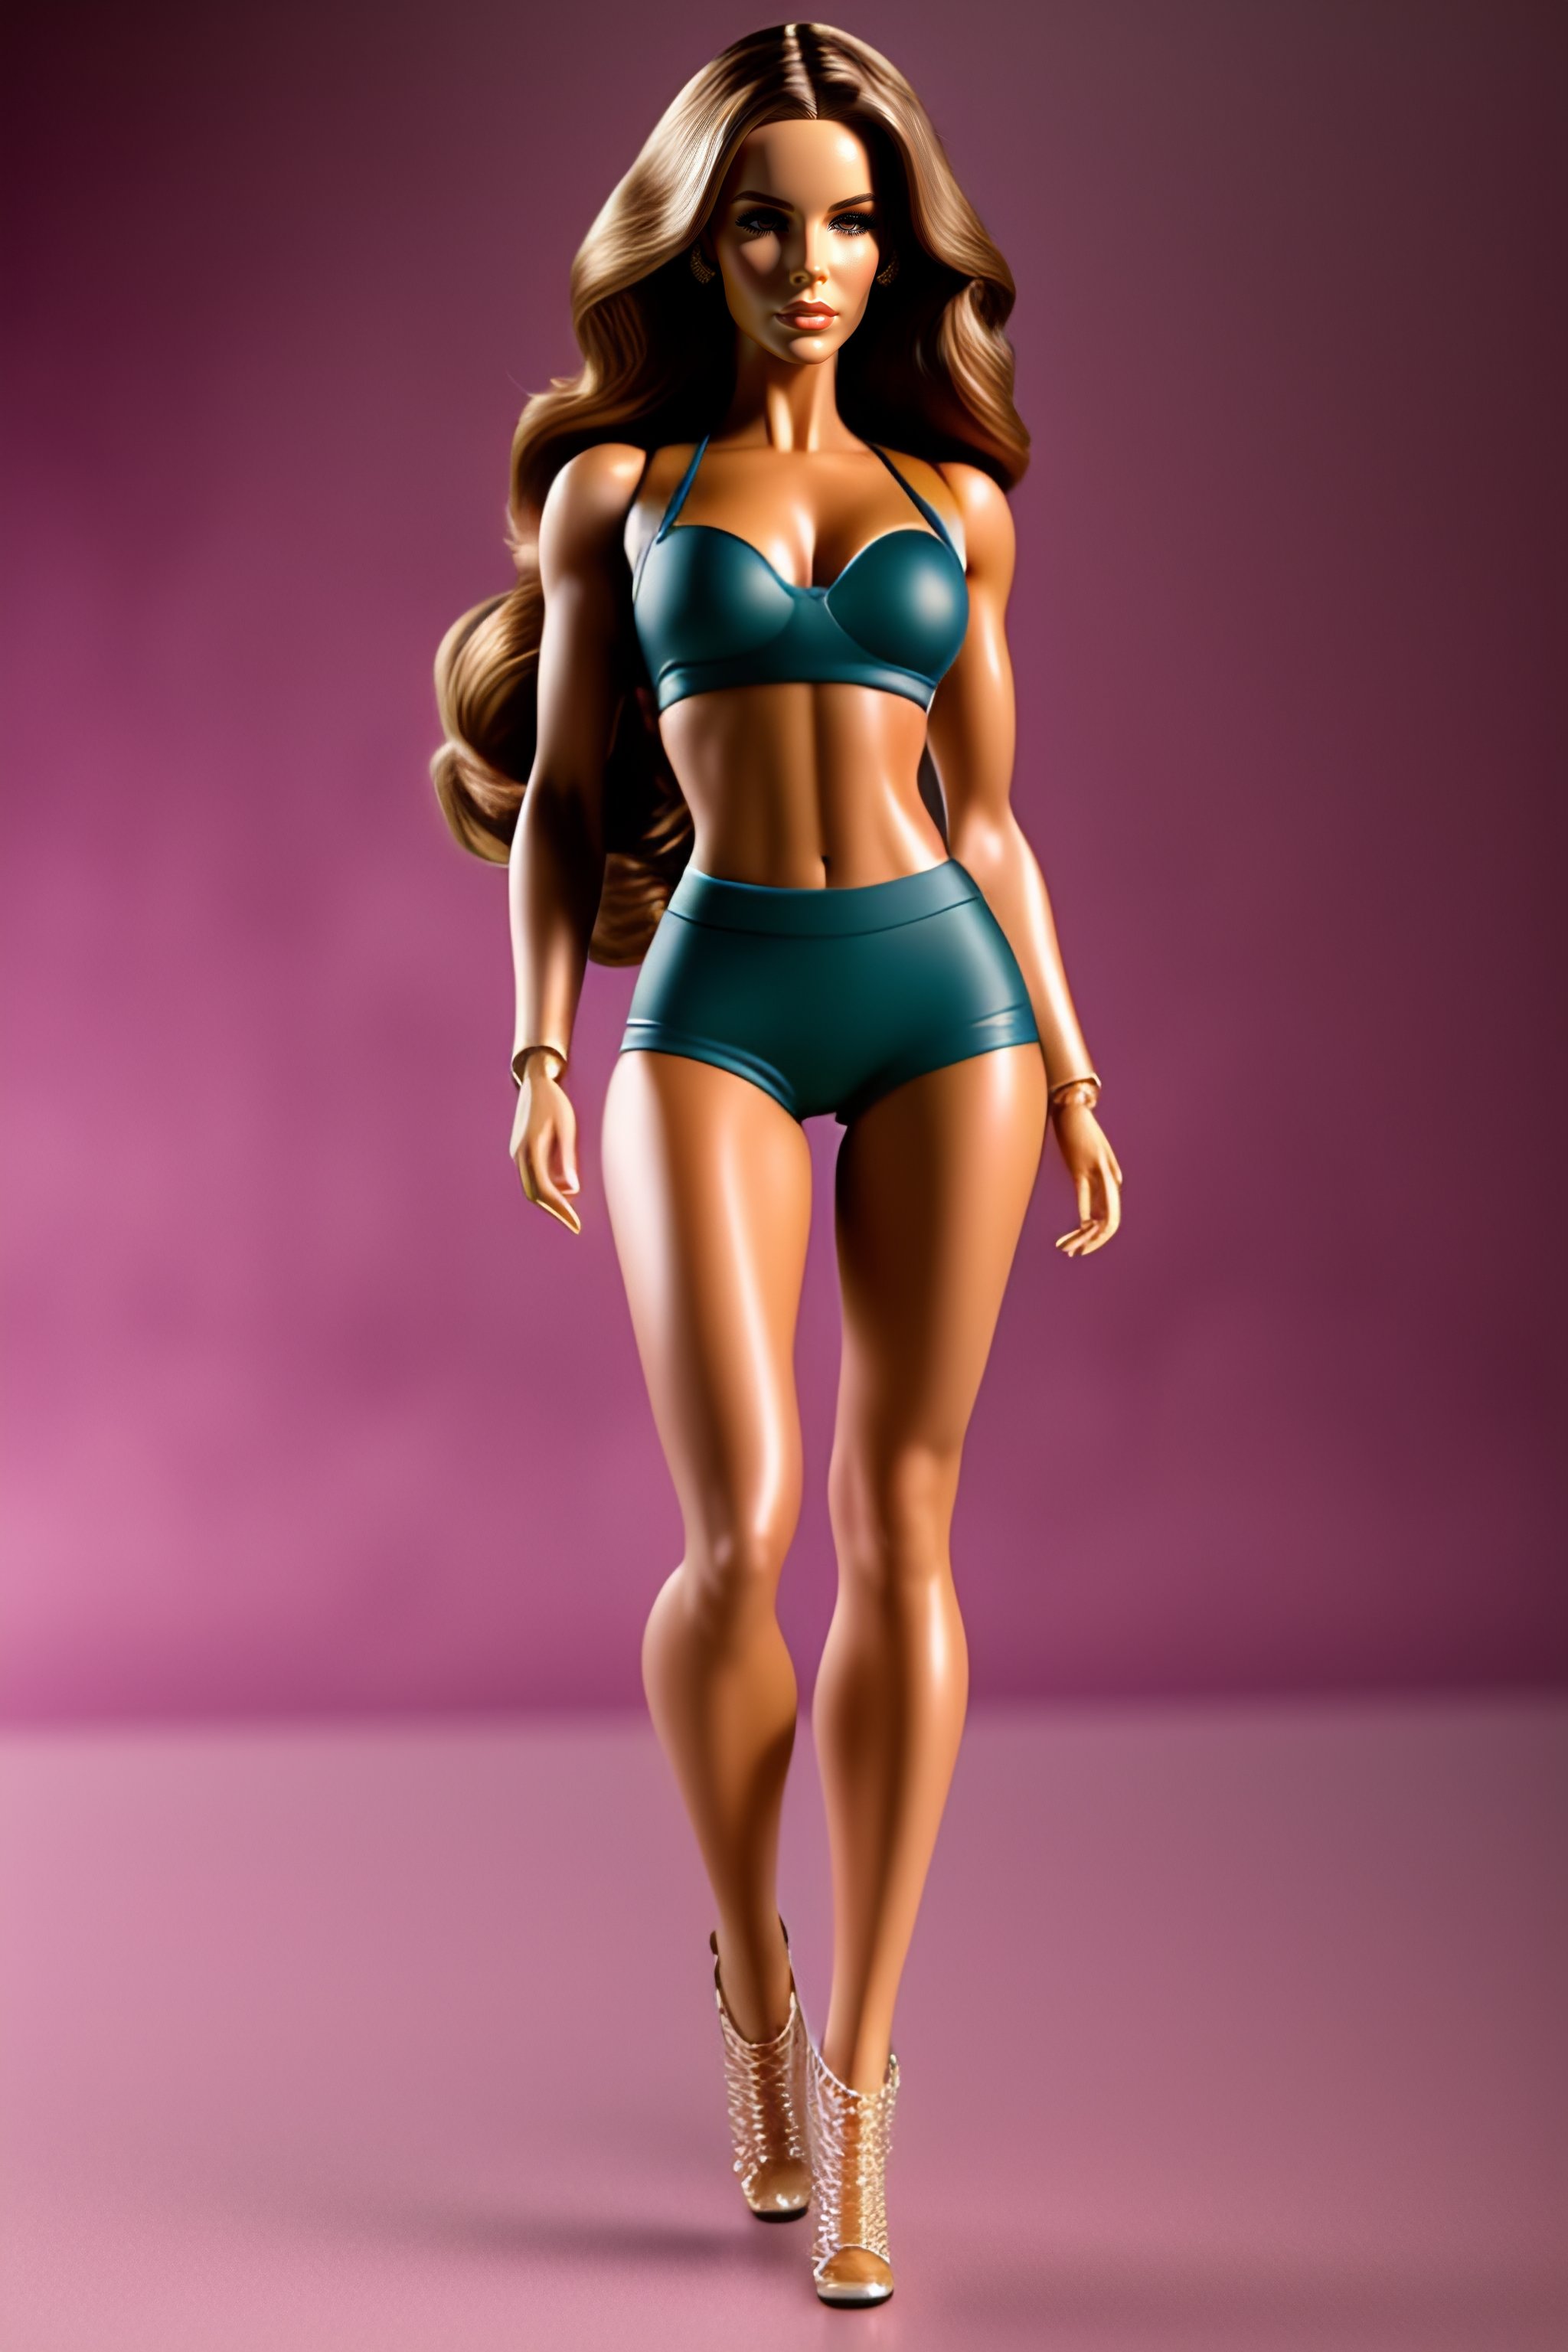 Lexica - Kate beckinsale plastic tight barbie doll body, pretty